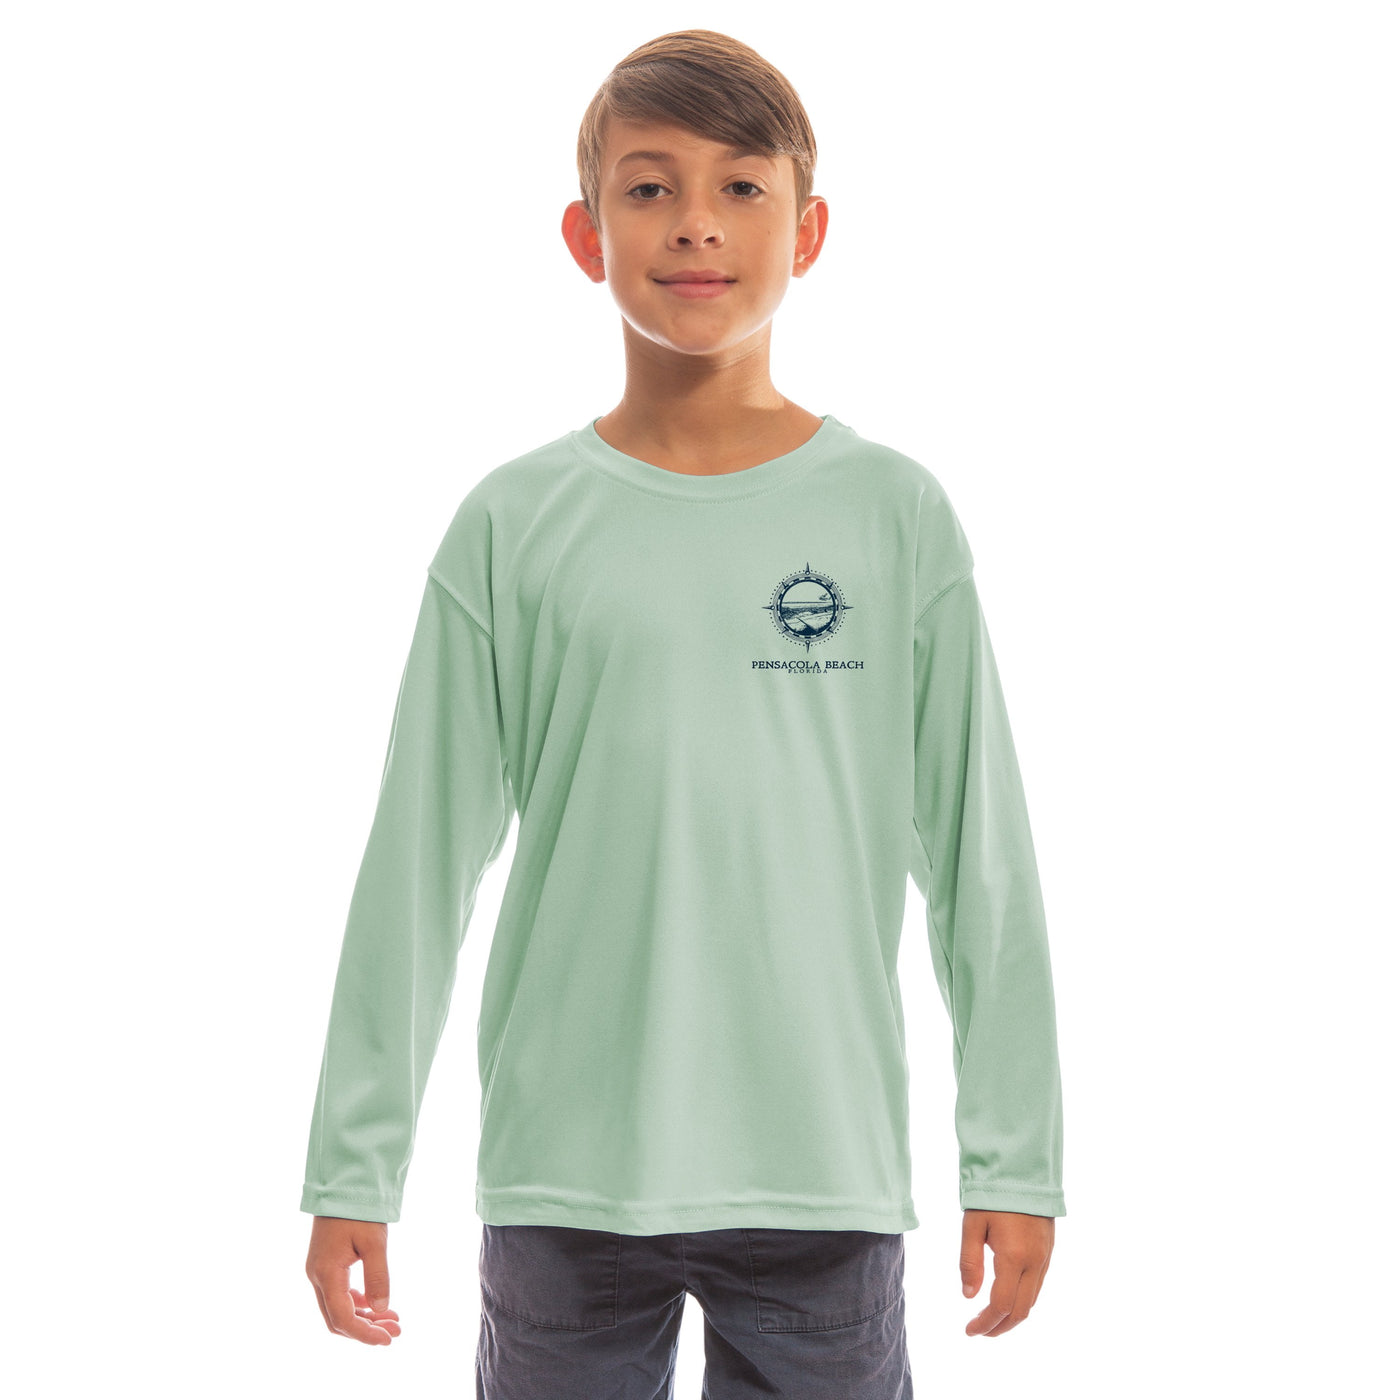 Compass Vintage Pensacola Beach Youth UPF 50+ UV/Sun Protection Long Sleeve T-Shirt